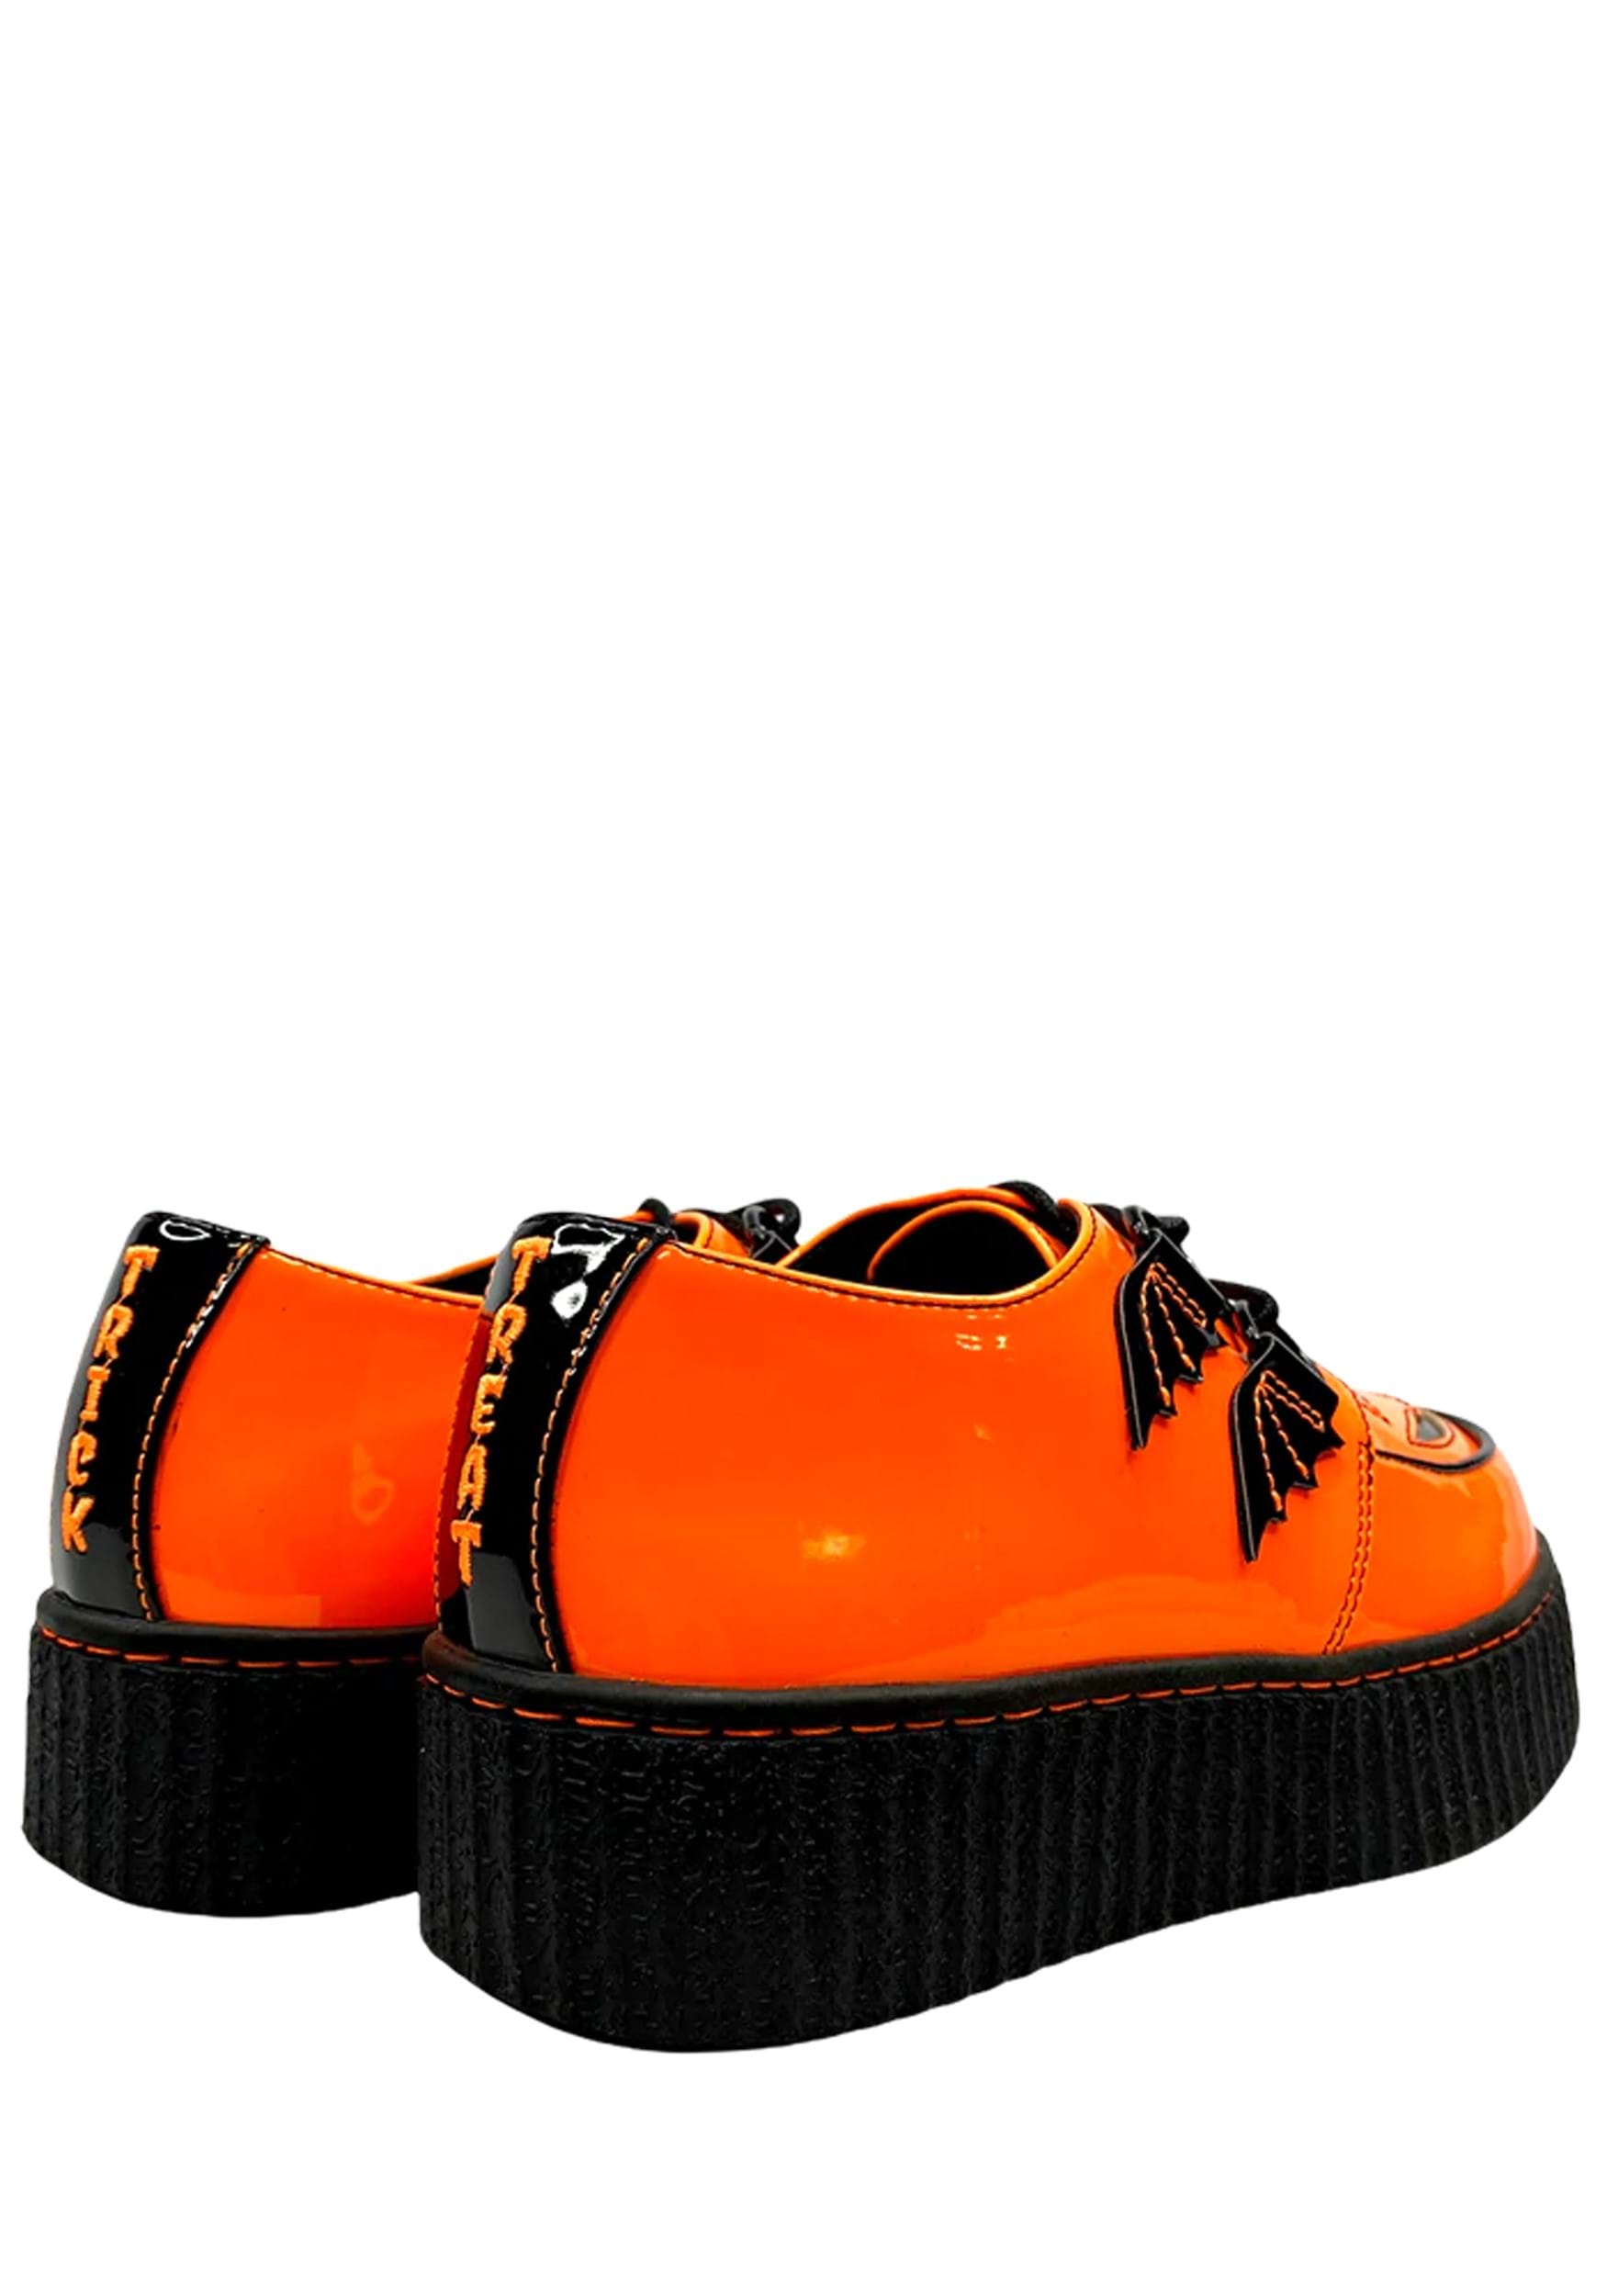 Patent Orange Jack O' Lantern Creeper Shoes